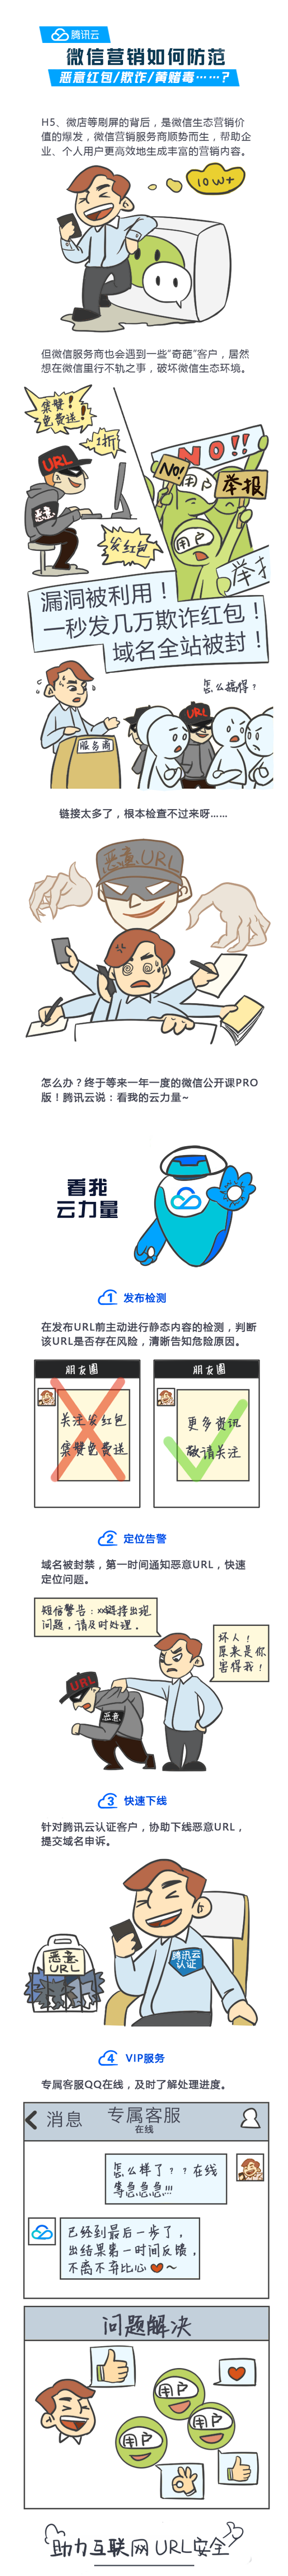 【j2开奖】腾讯云URL安全解决方案如何助力微信安全营销